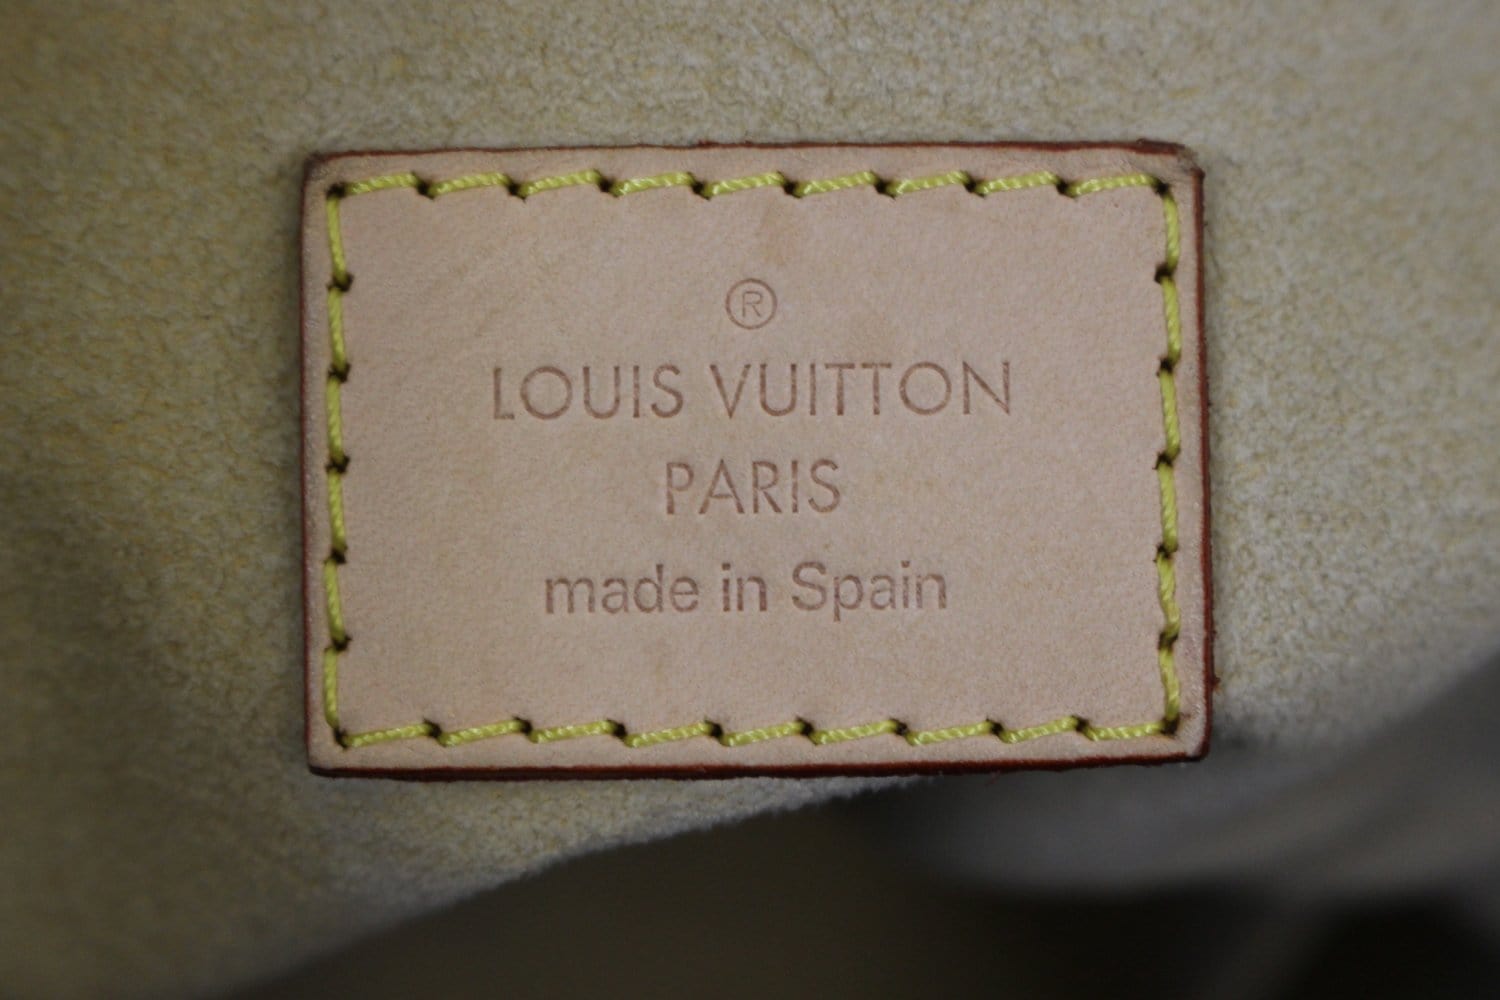 LOUIS VUITTON Monogram Artsy GM Tote Hobo Handbag Limited